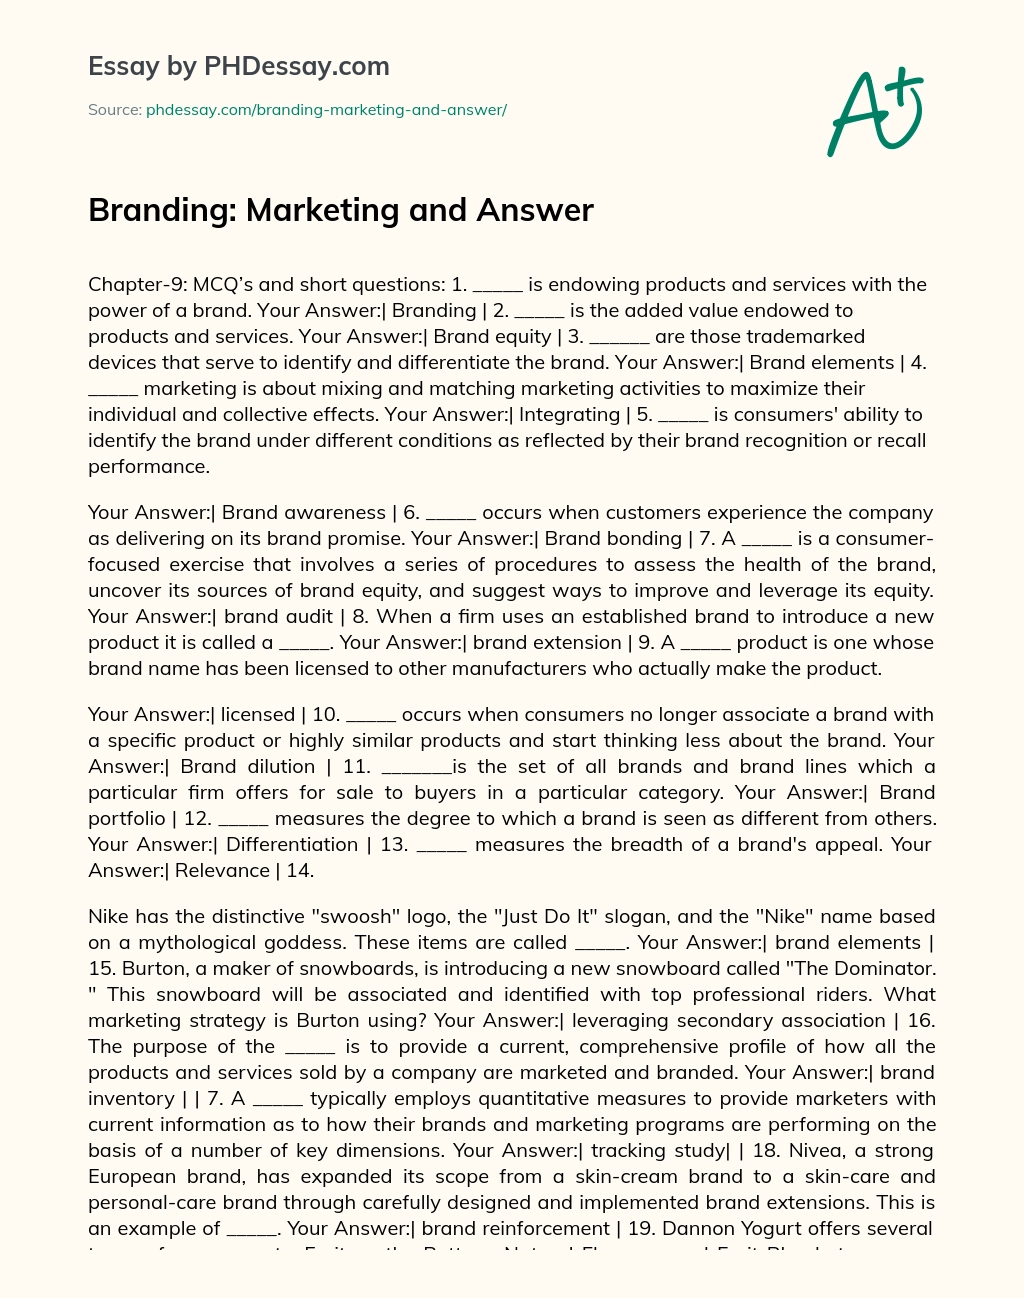 Branding: Marketing and Answer essay